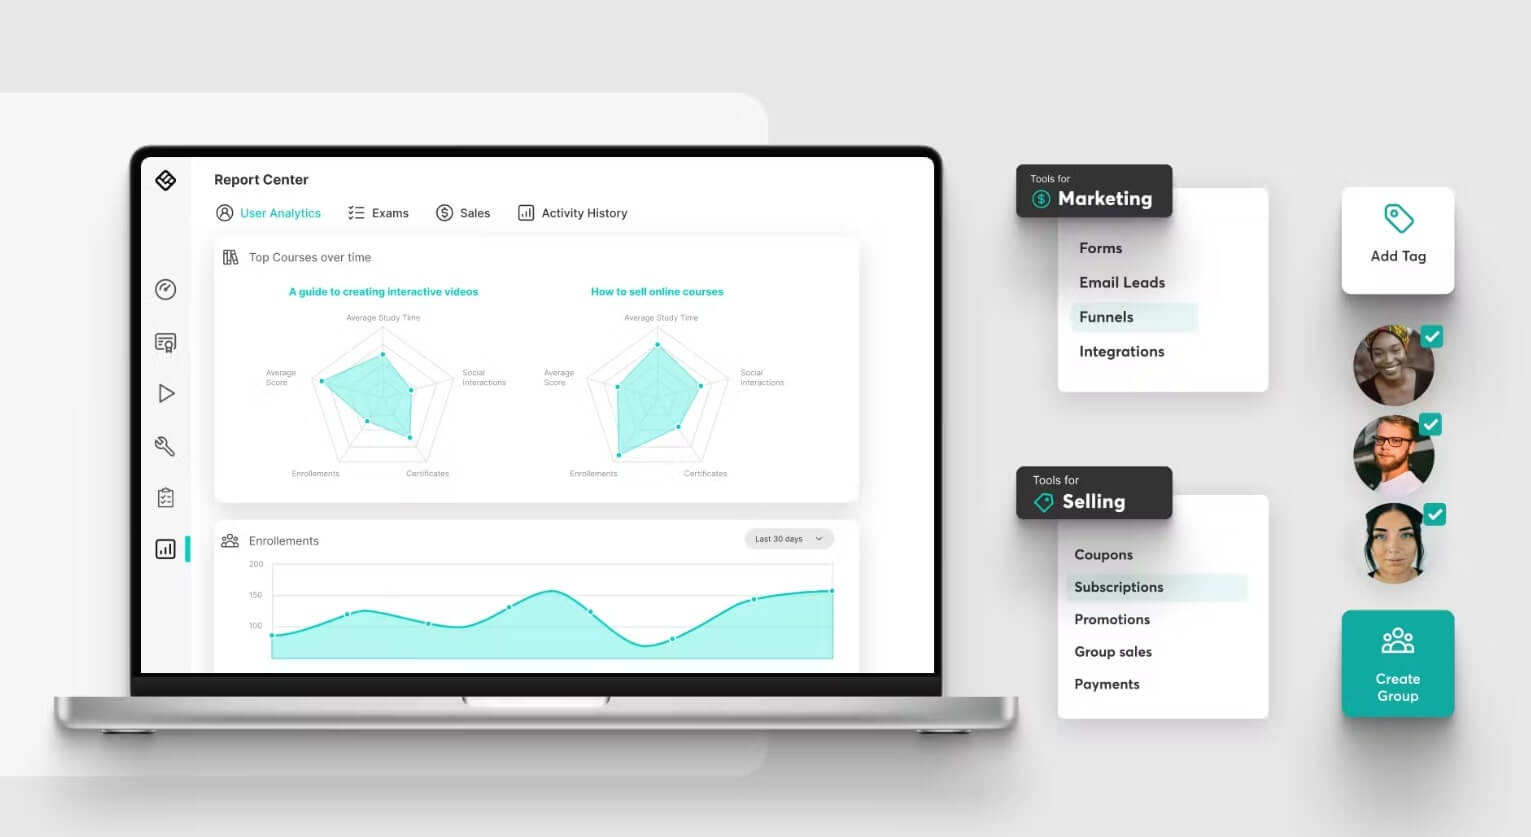 A screenshot showing LearnWorlds' platform interface and user dashboard.